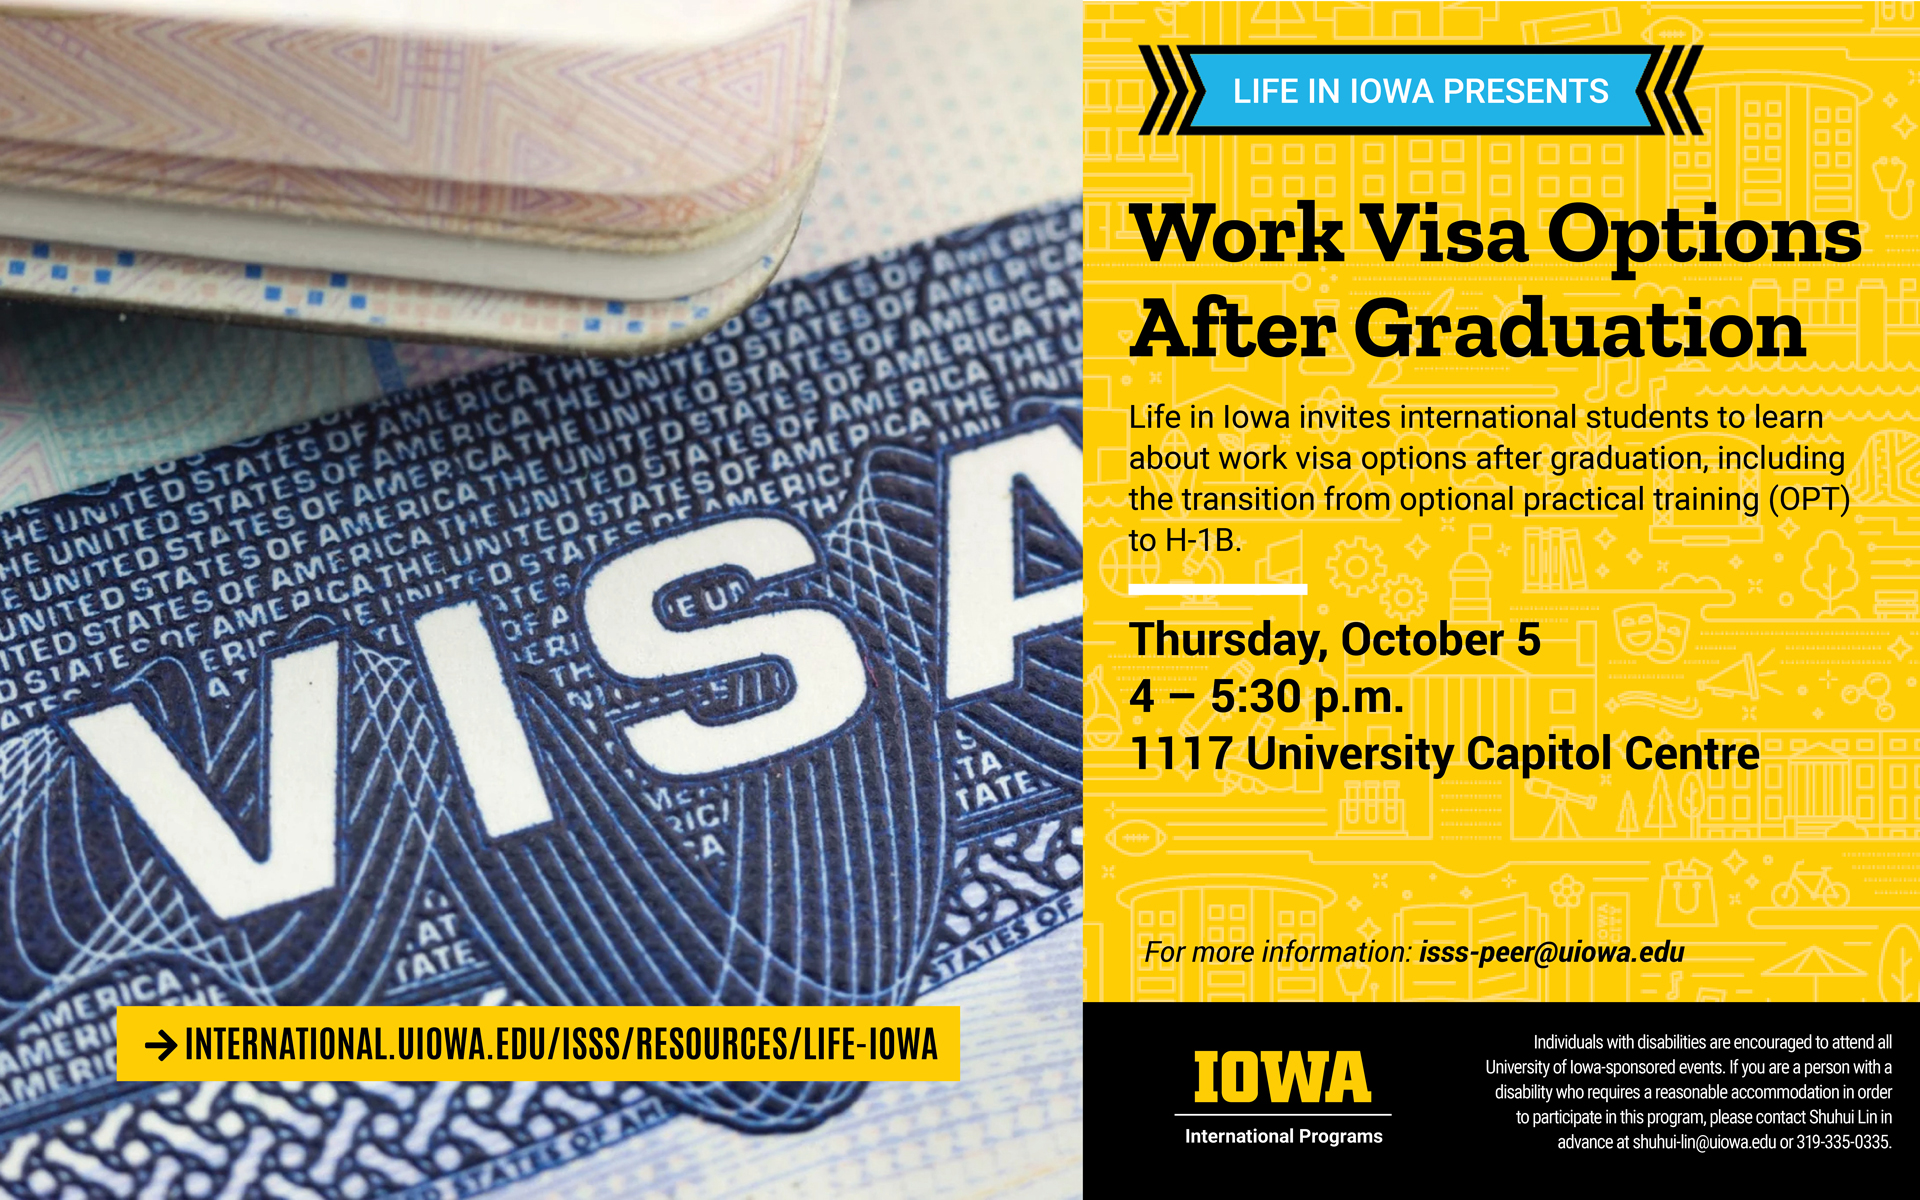 Work Visa Options After Graduation, Thursday October 5, 4-5:30pm at 1117 University Capitol Centre